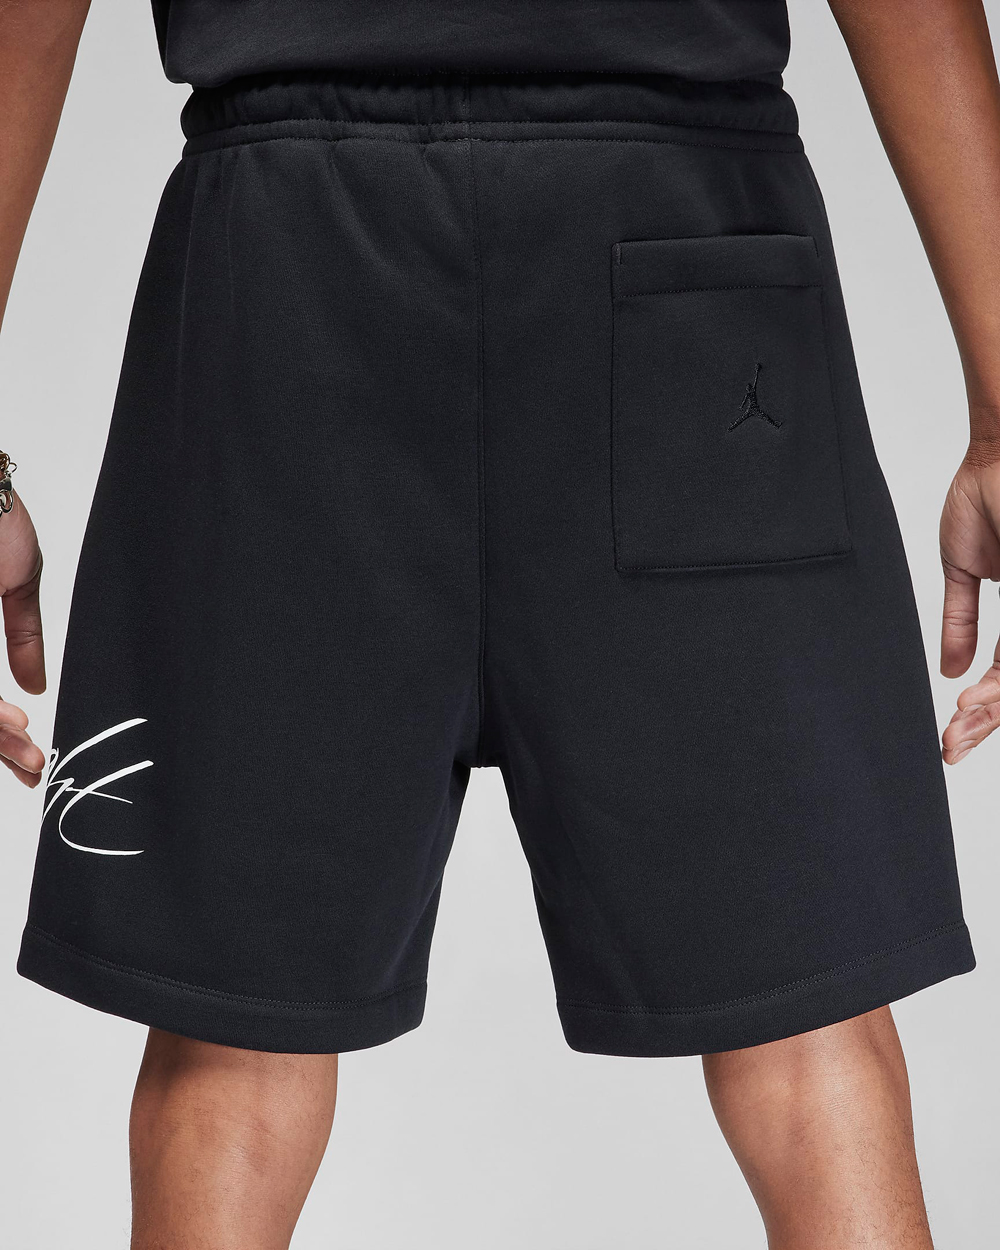 Jordan-Brooklyn-Fleece-Shorts-Black-White-3